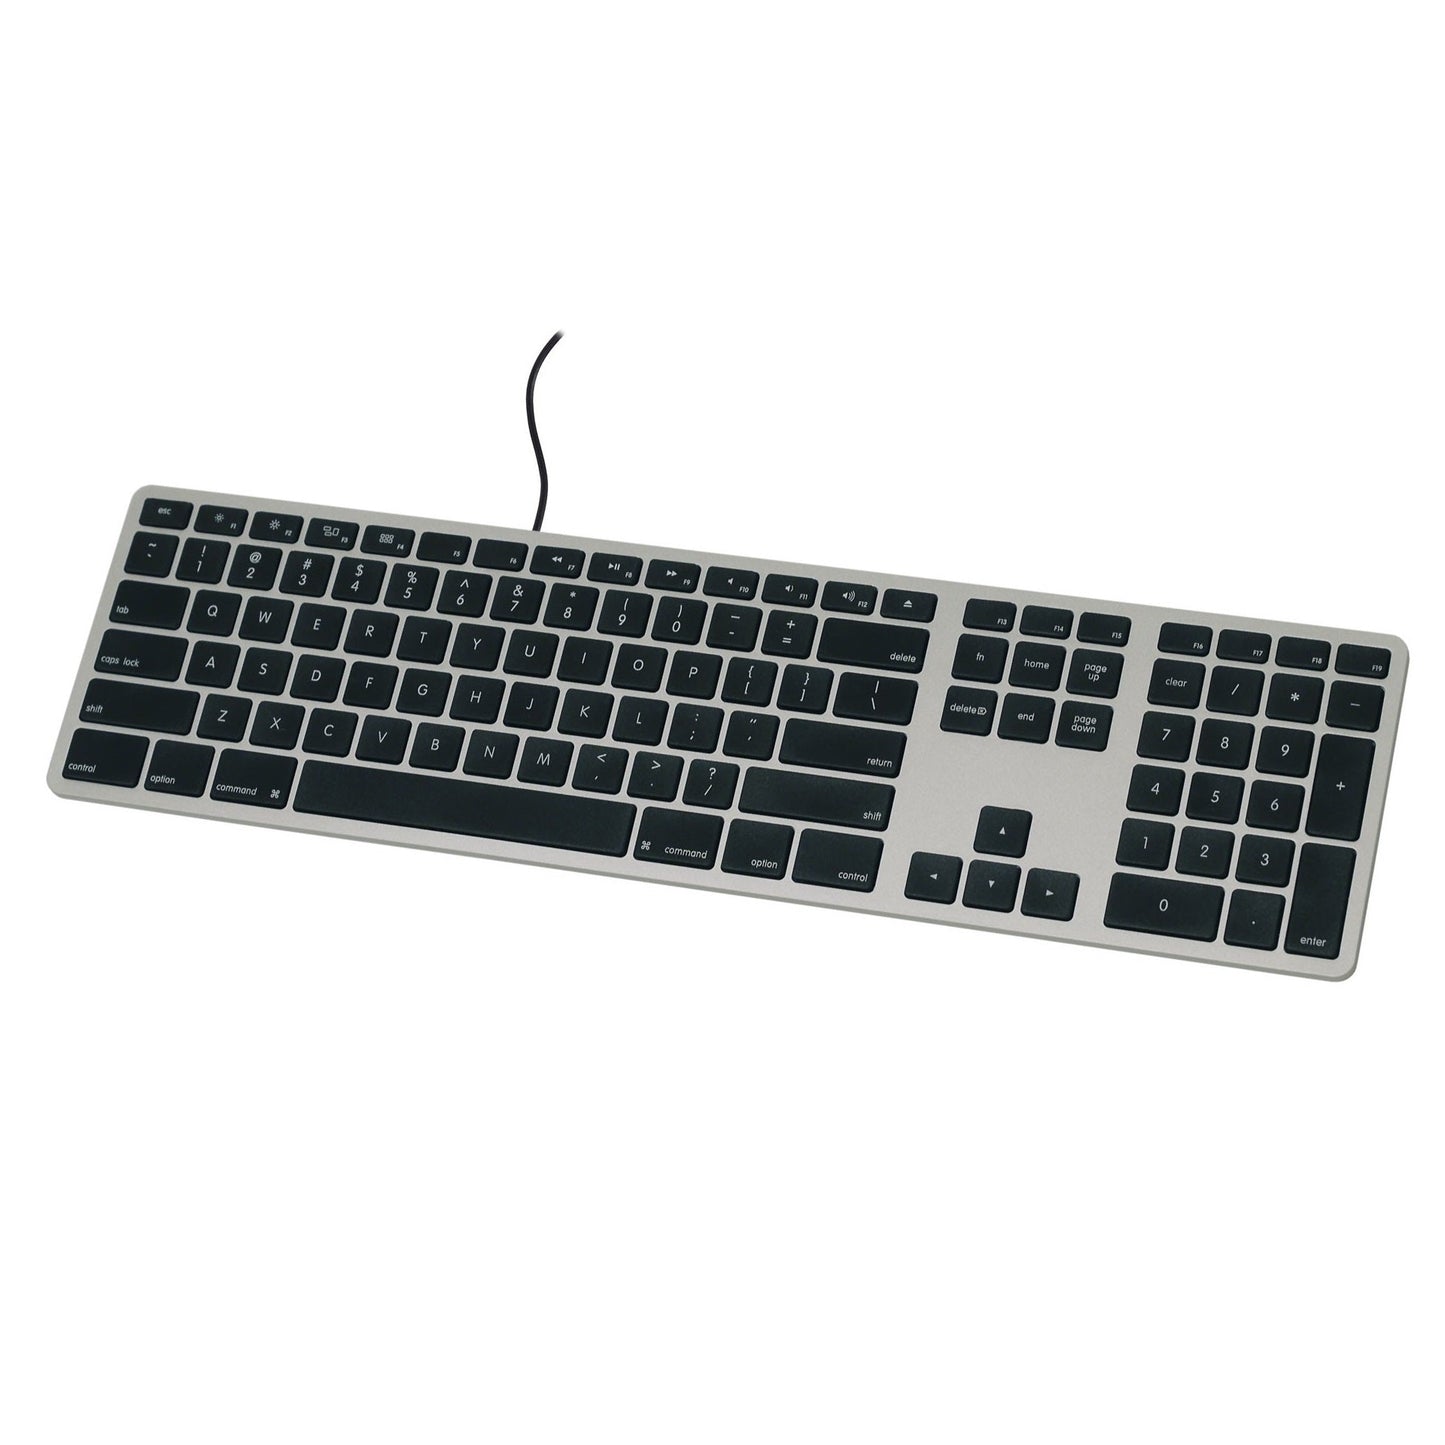 REFURBISHED USB-C Keyboard for Mac - Space Gray